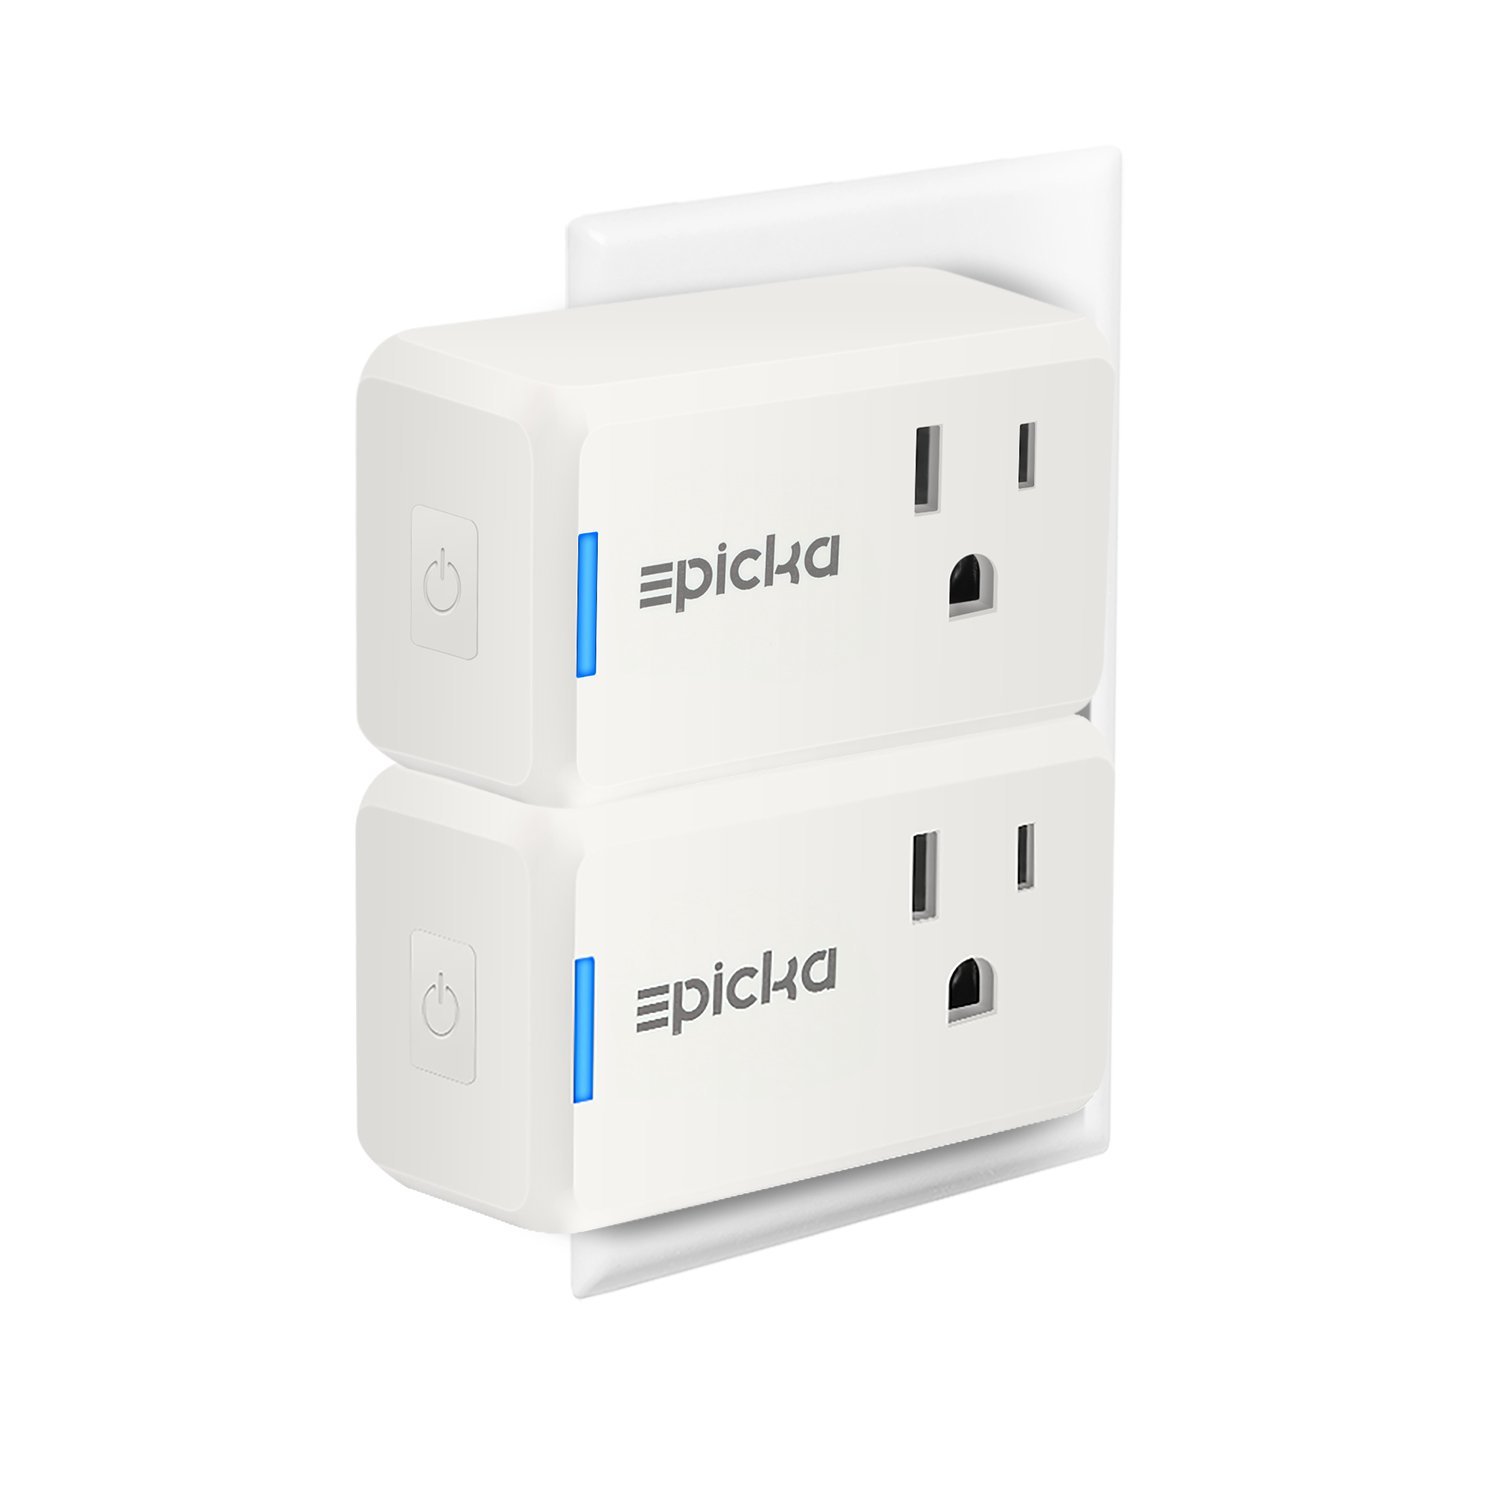 2-pack Epicka Wi-Fi mini smart plugs for $16